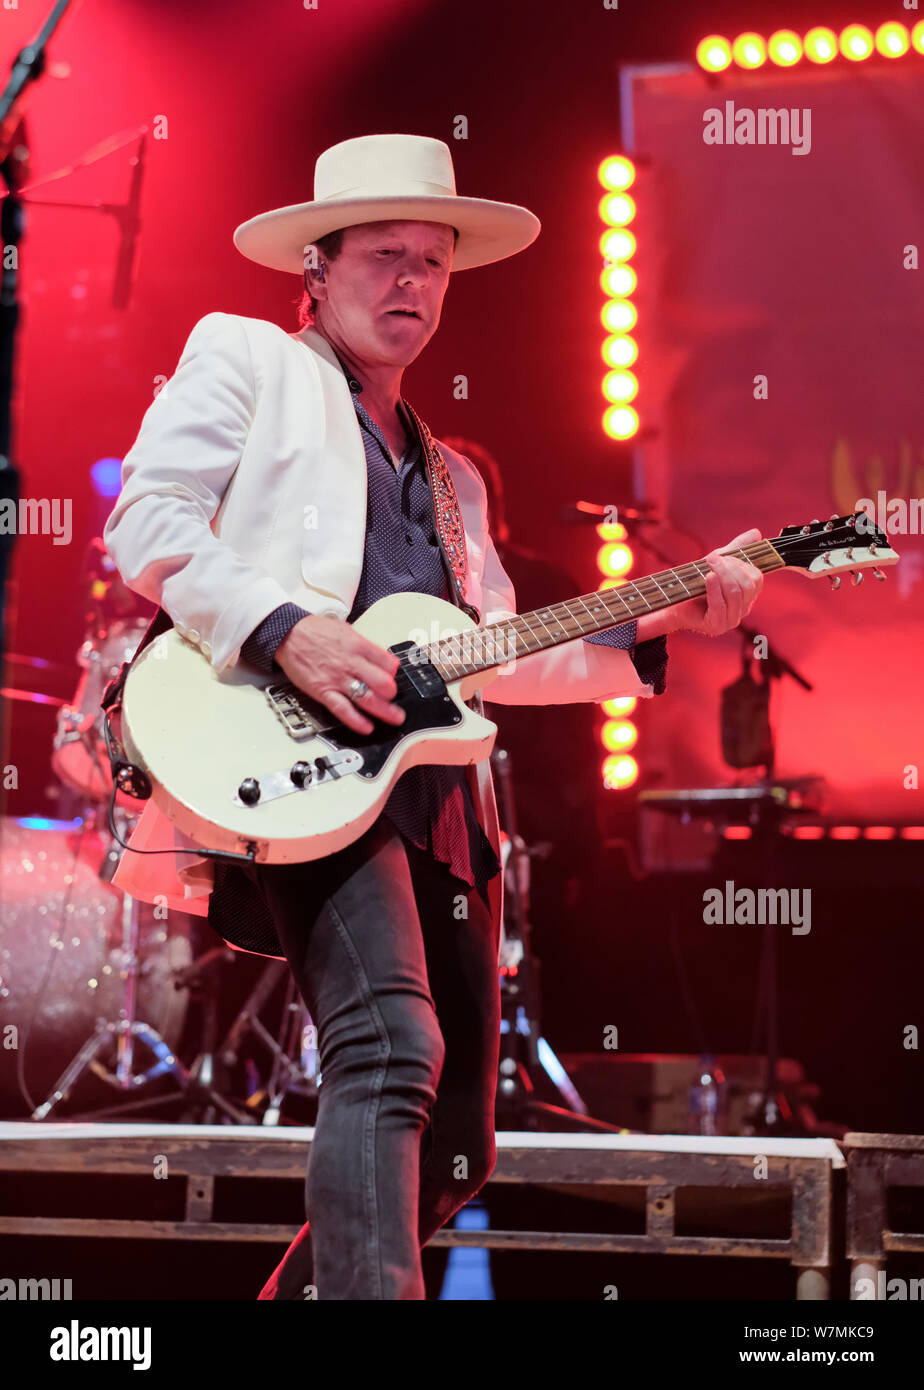 Kiefer Sutherland performing at The Wickham Festival, Wickham, UK. August 4, 2019 Stock Photo